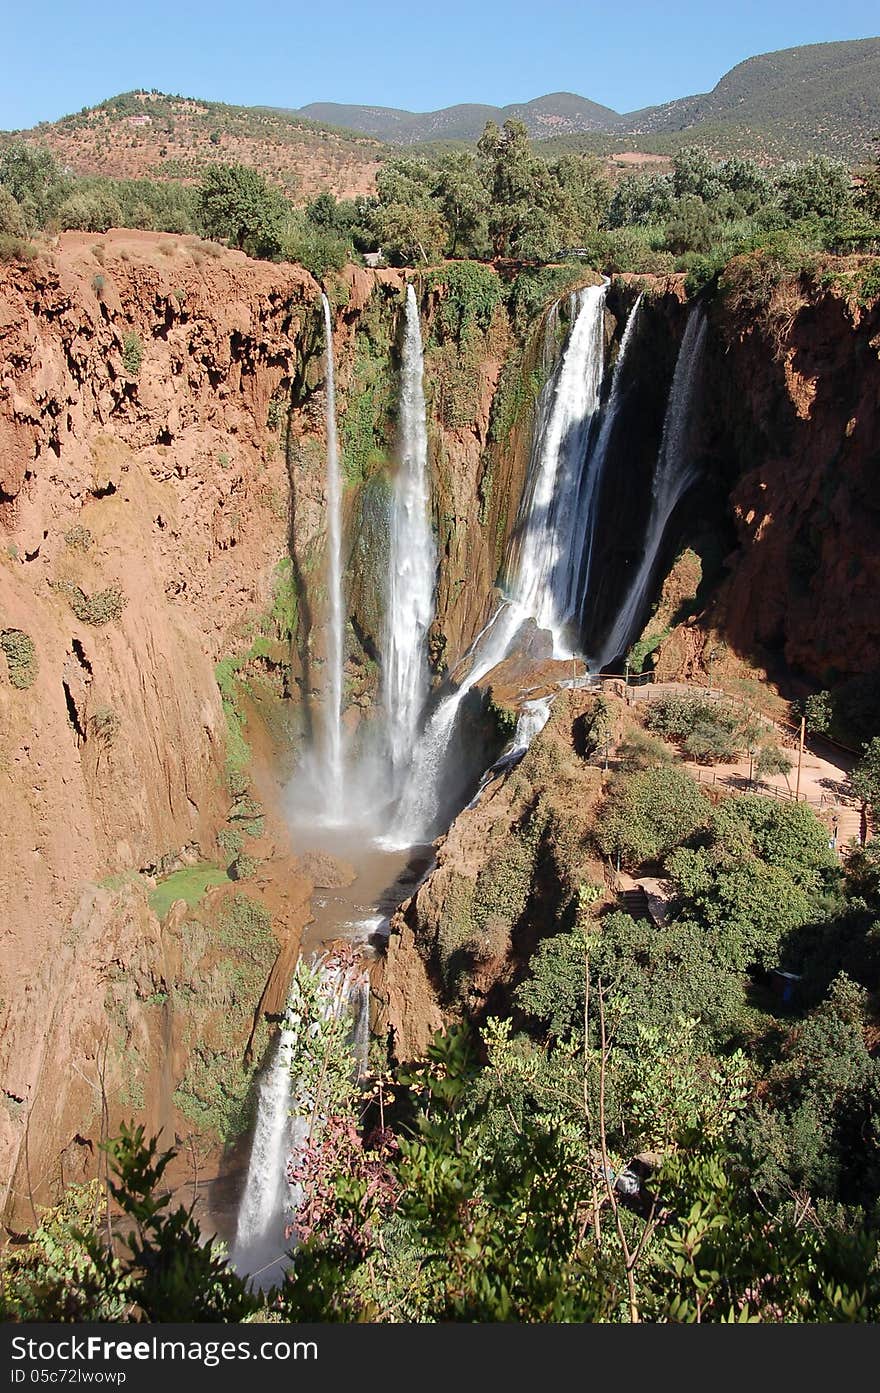 Cascade d’Ouzoud, Waterfall, Morocco - Cascade d’ouzoud is the biggest waterfall in Morocco